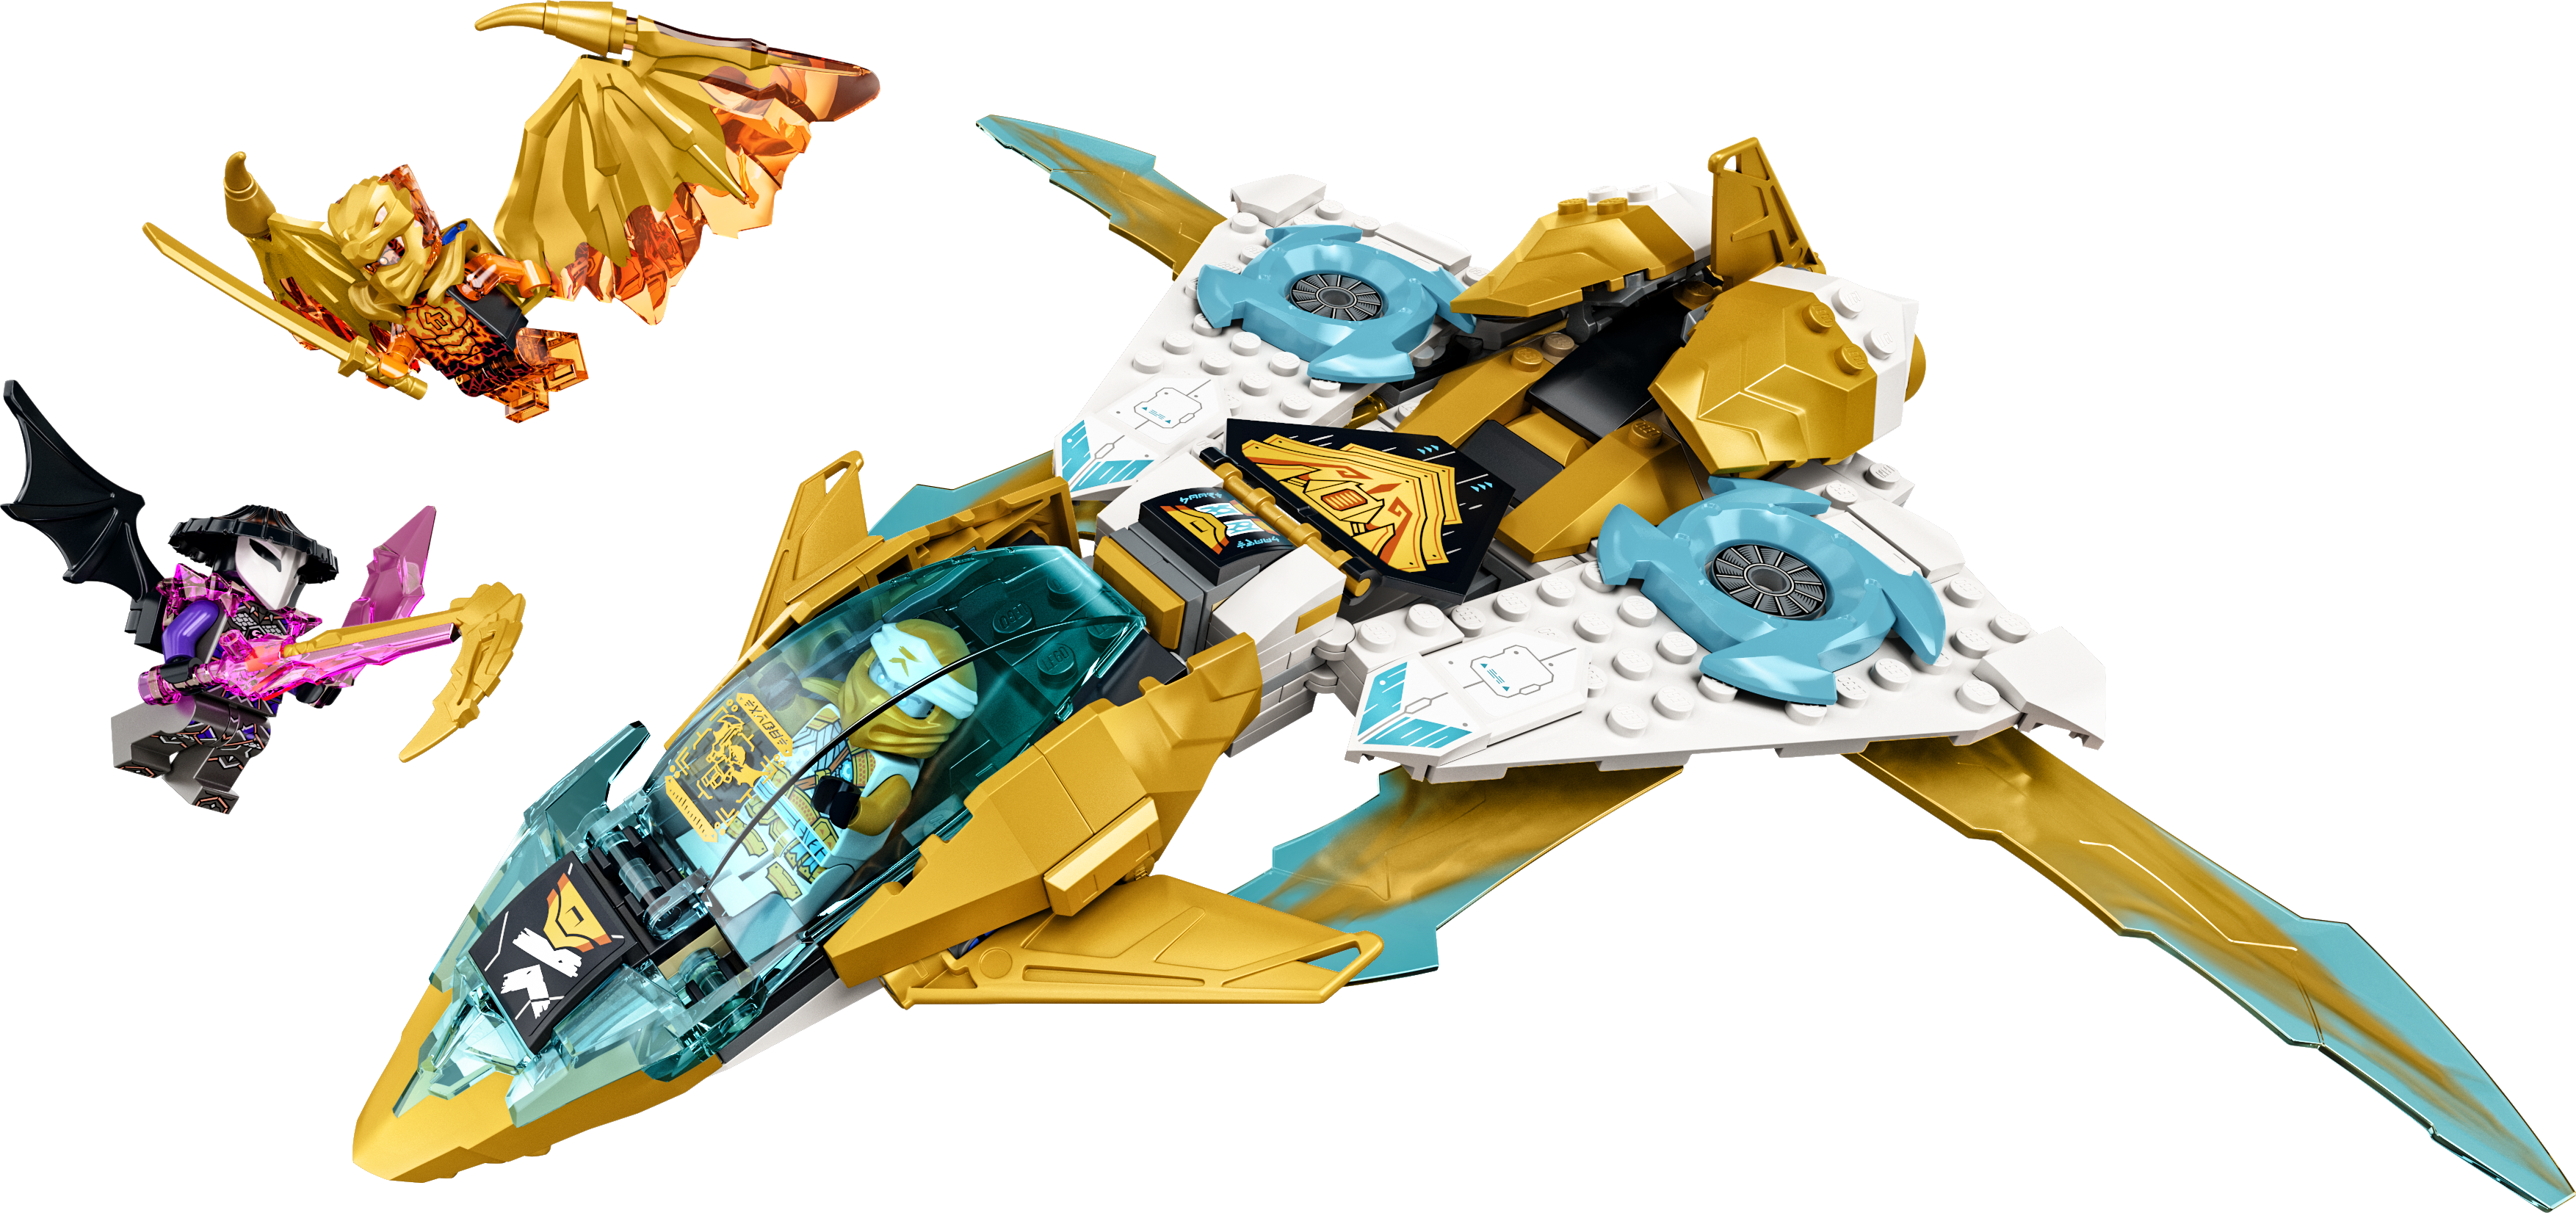 LEGO® NINJAGO 71770 Zanes Golddrachen-Jet